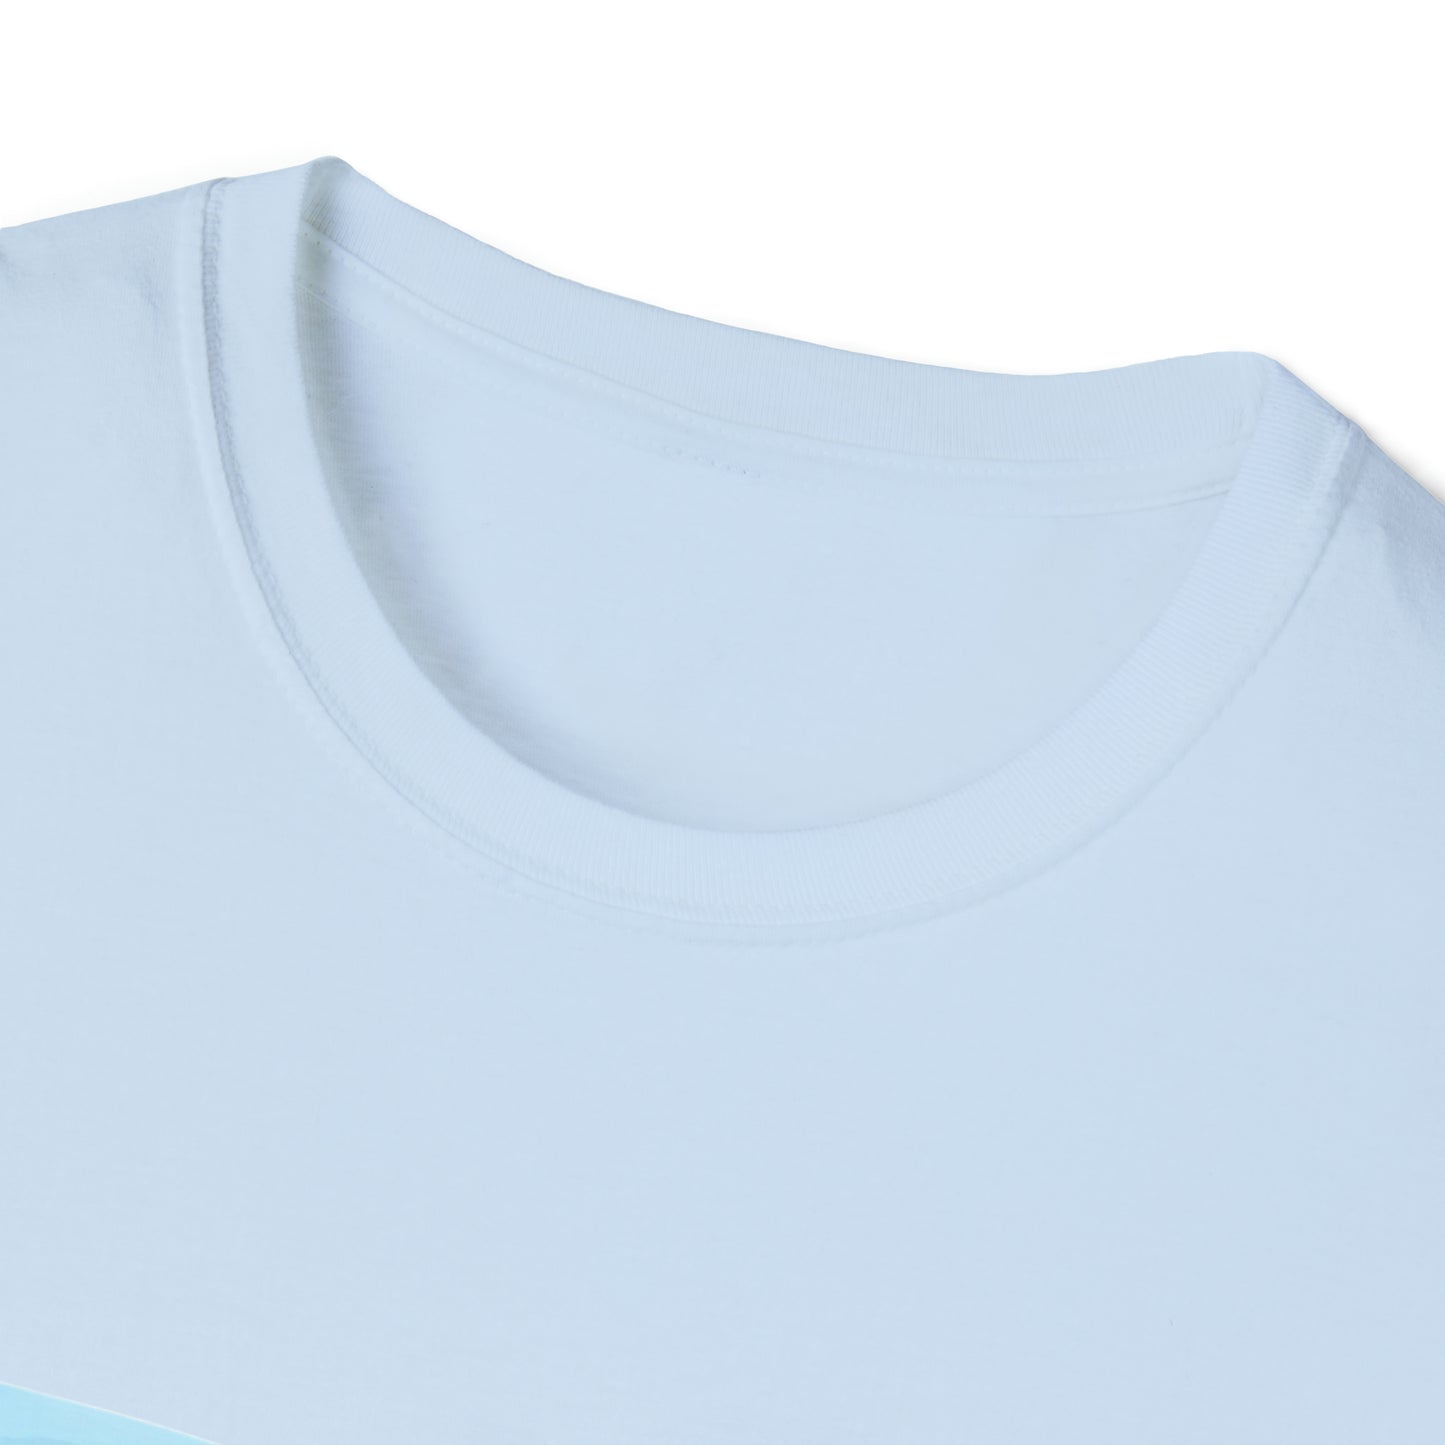 RN Nurse, Nurse Preceptor Gift, Nurse Gift, Unisex Softstyle T-Shirt